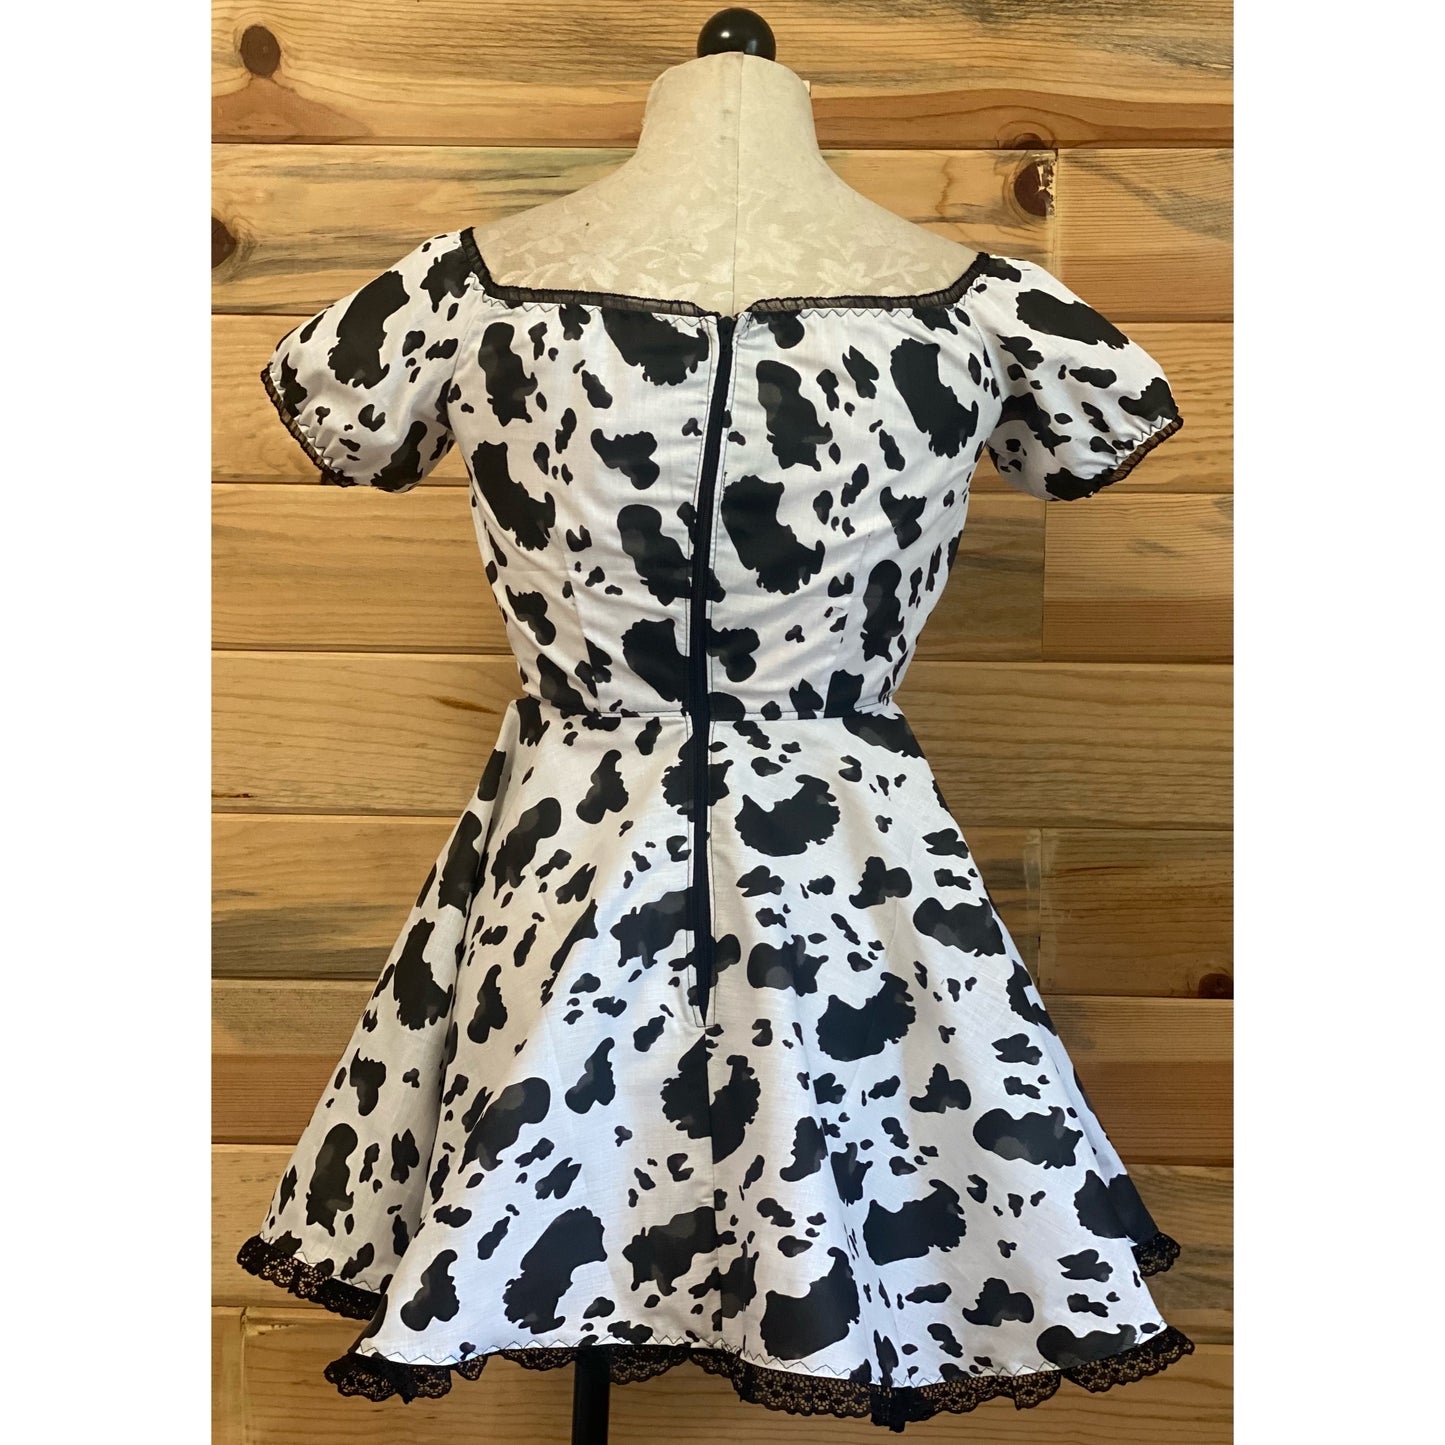 The Tori Barmaid Dress in Cow Print